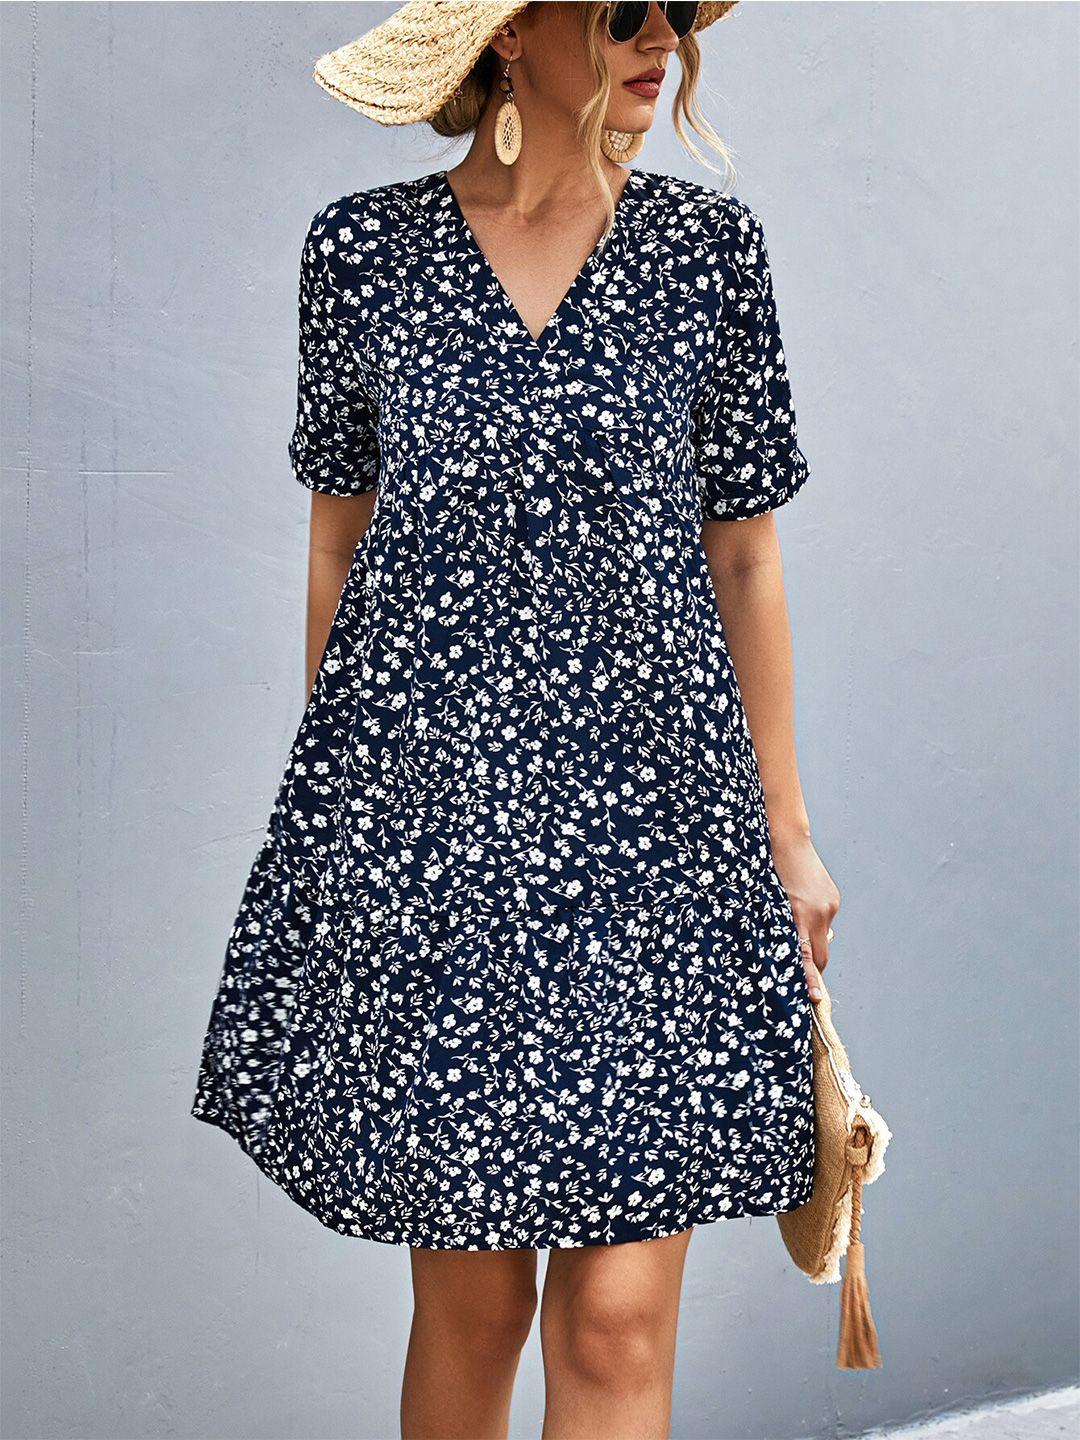 bostreet navy blue floral print a-line dress